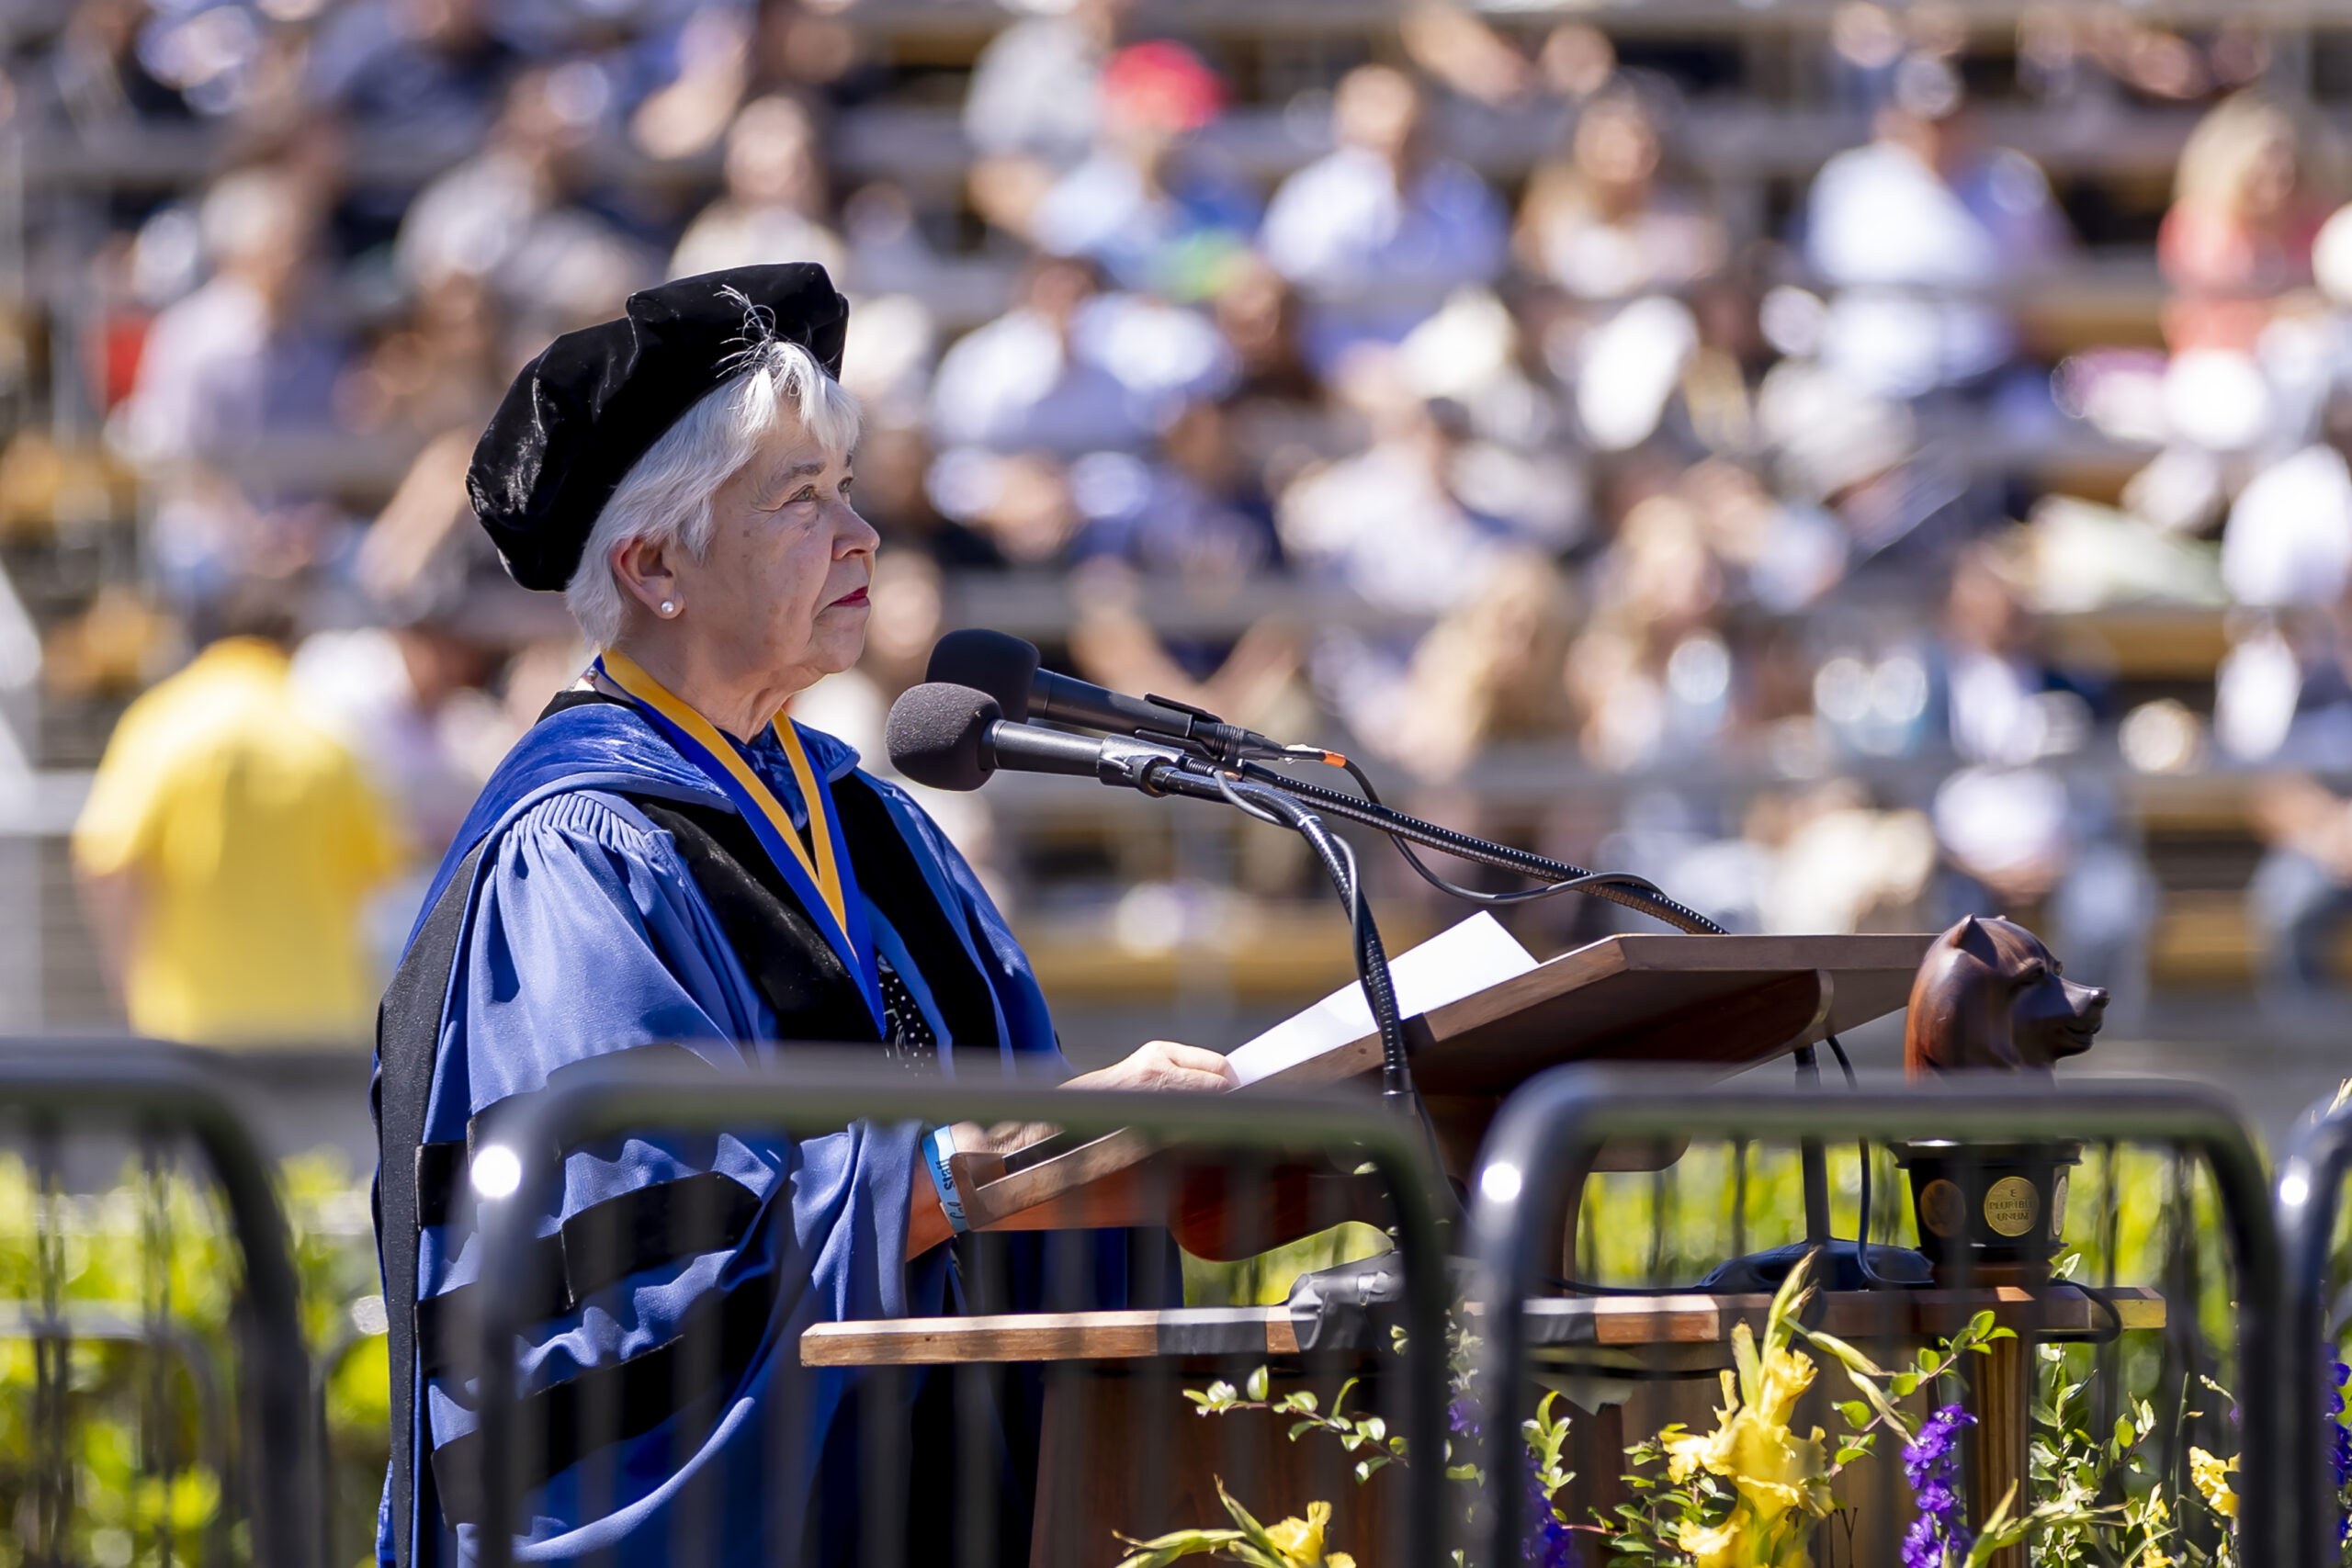 Chancellor Carol Christ stands at a podium wearing academic regalia.